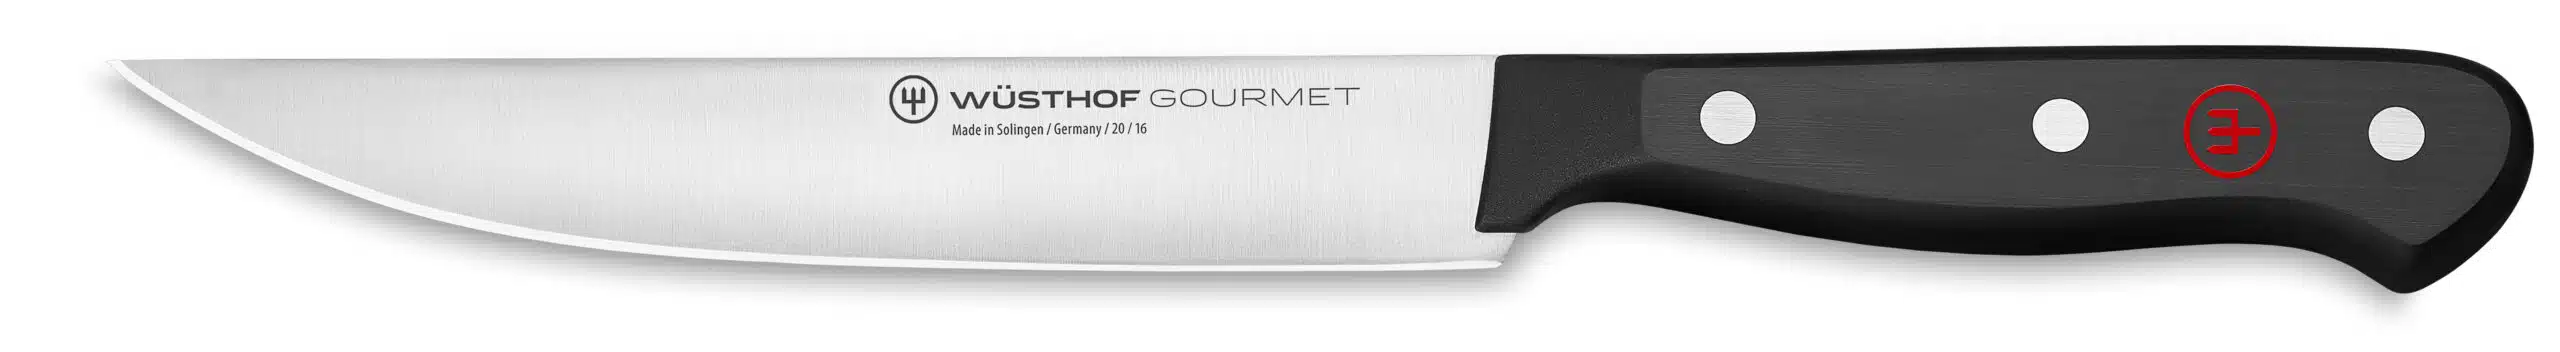 Wusthof Gourmet Utility Knife 16cm